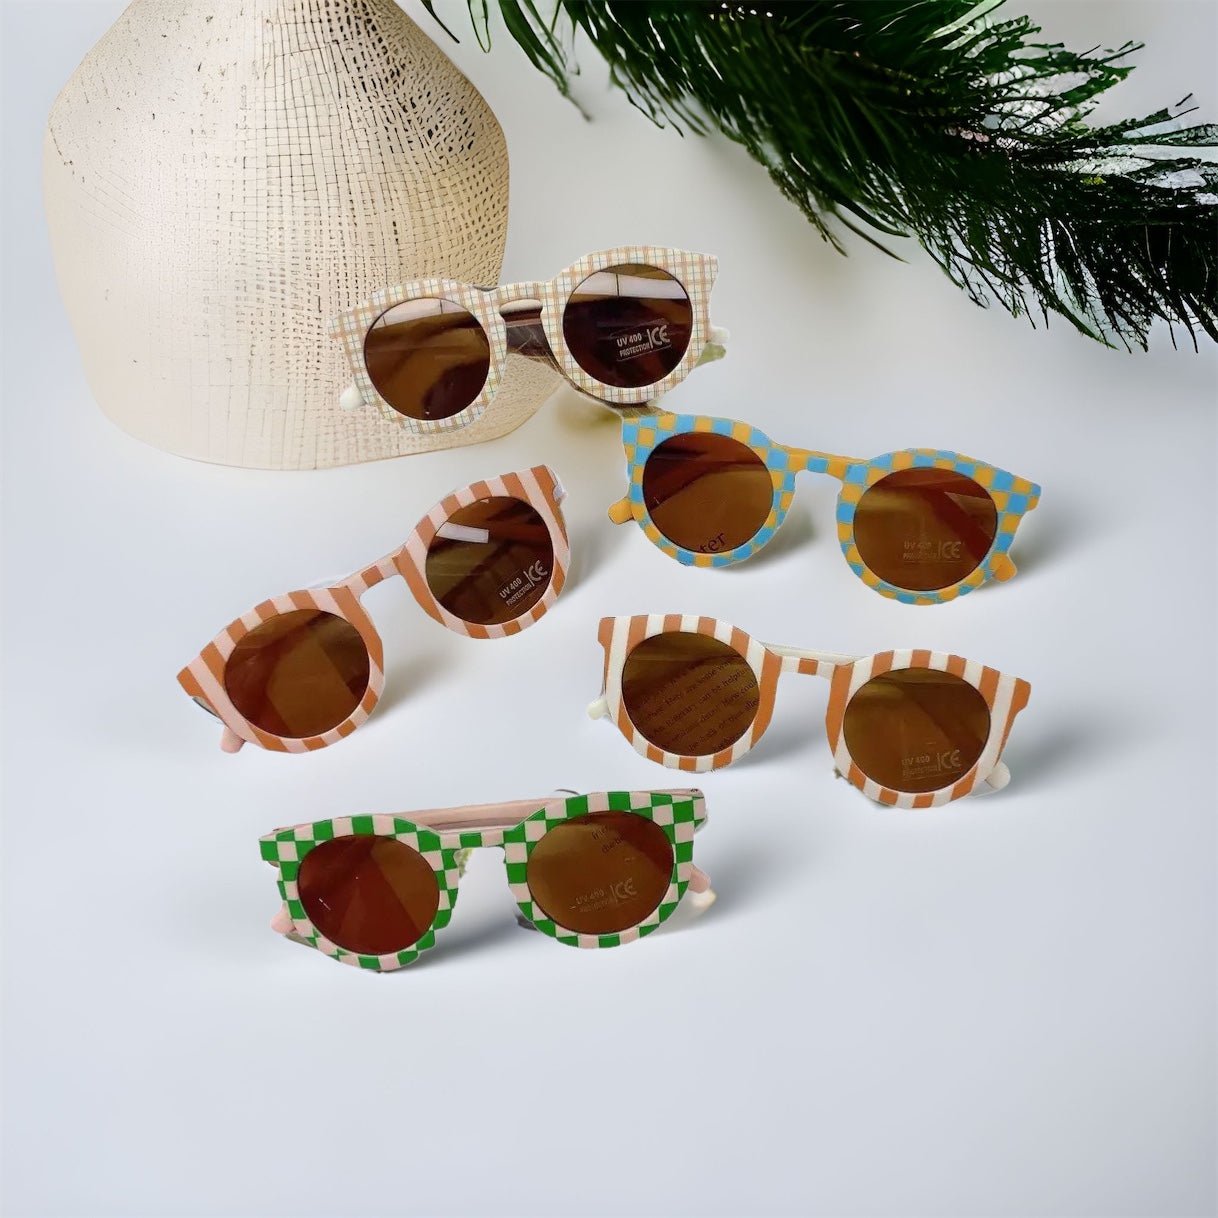 Shape Sun Glasses - Sonnenbrille find Stylish Fashion for Little People- at Little Foxx Concept Store